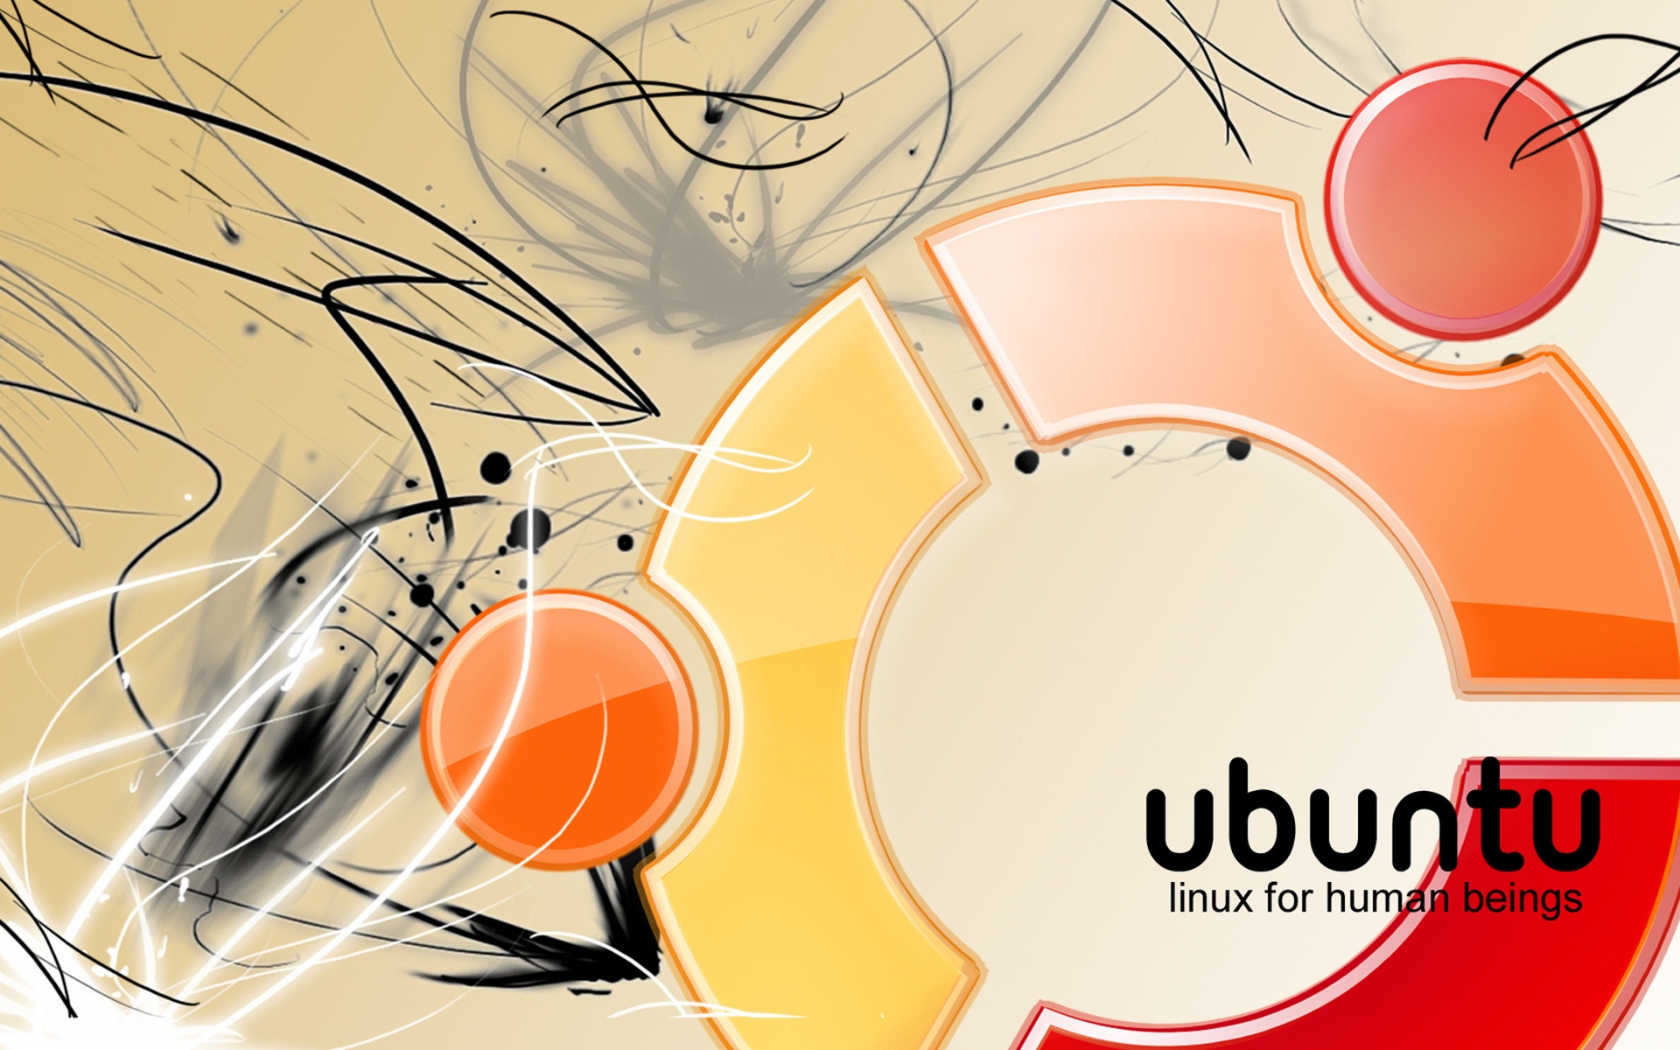 Ubuntu Linux for 1680 x 1050 widescreen resolution